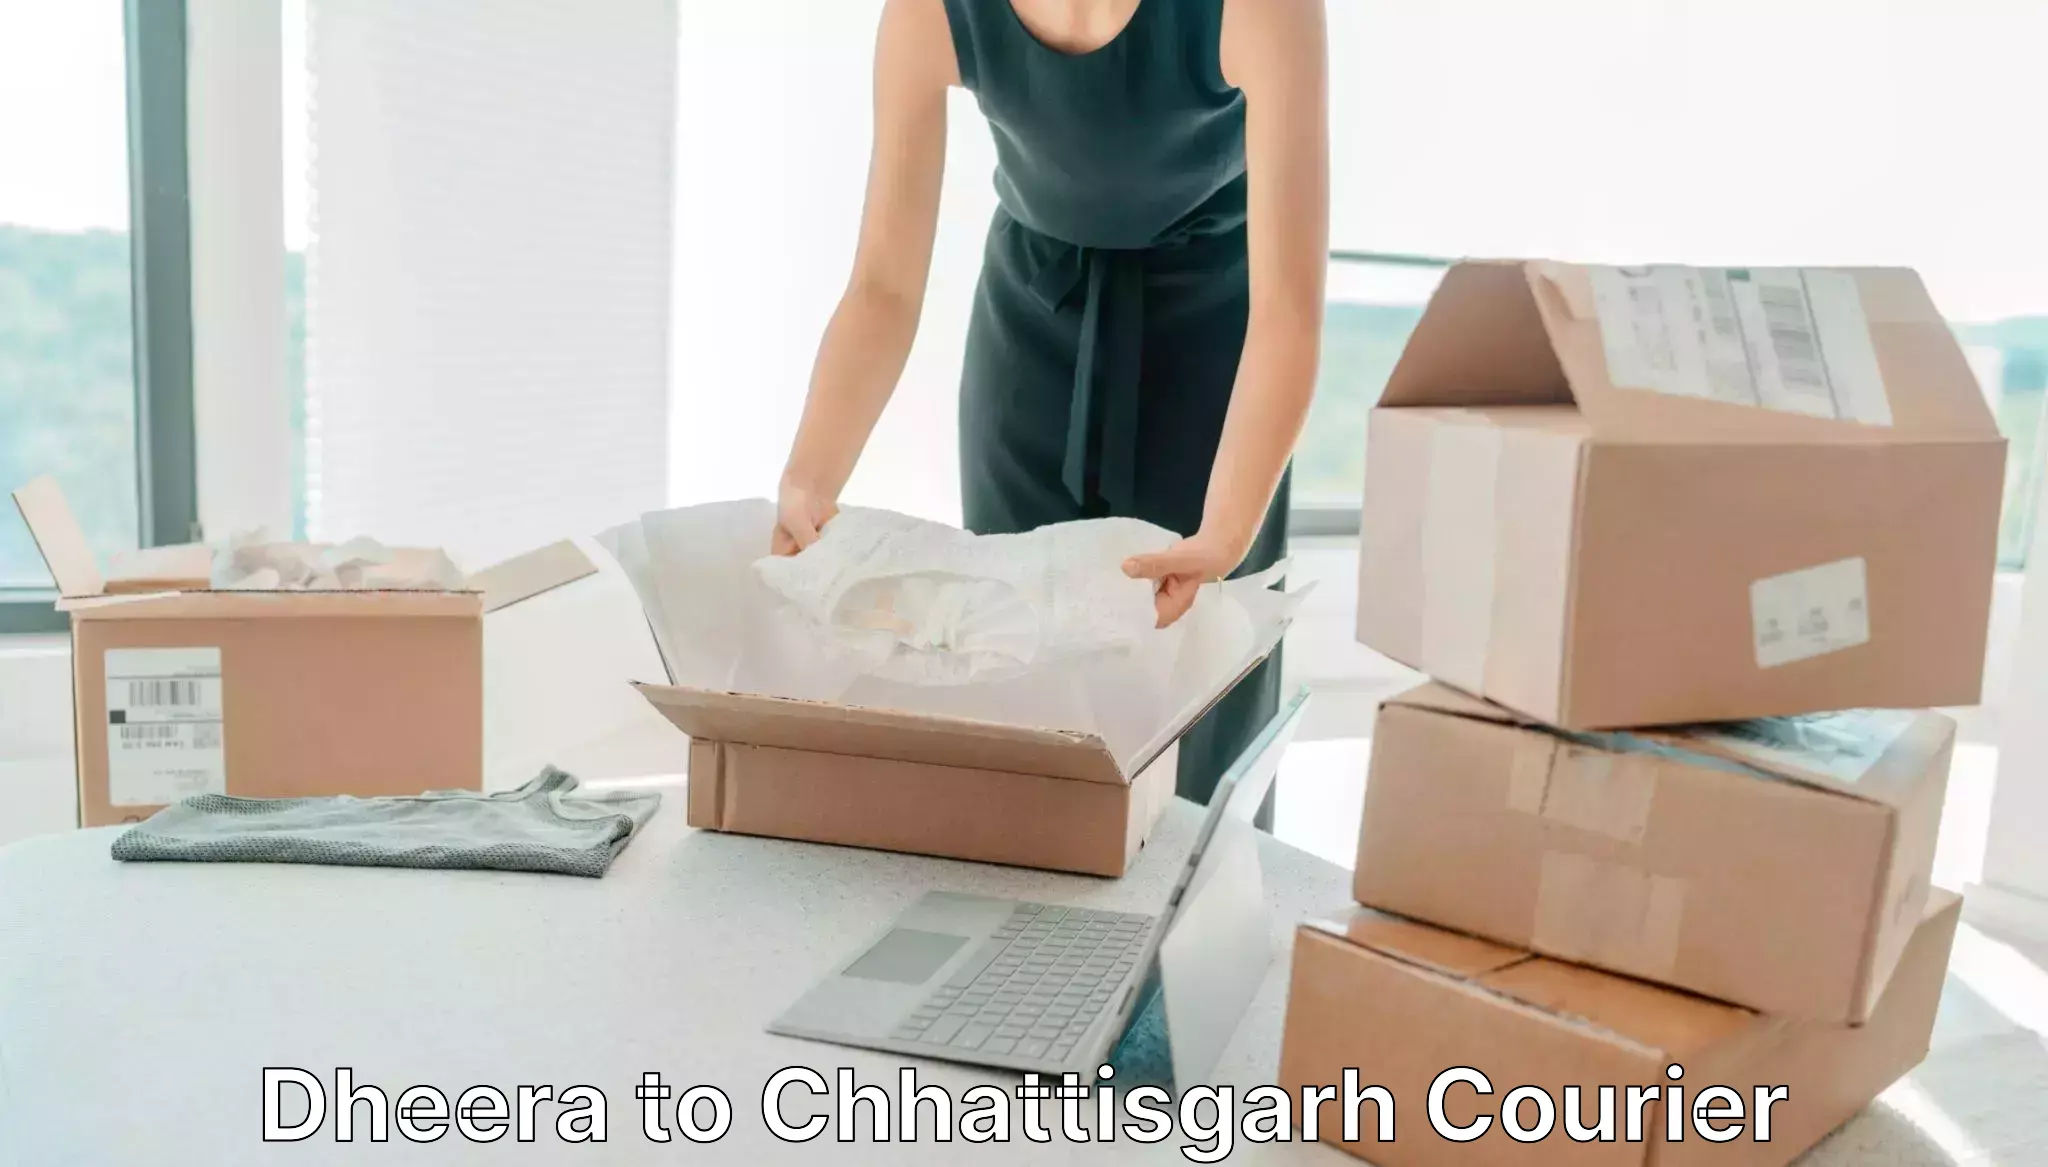 Courier service booking Dheera to Chhattisgarh